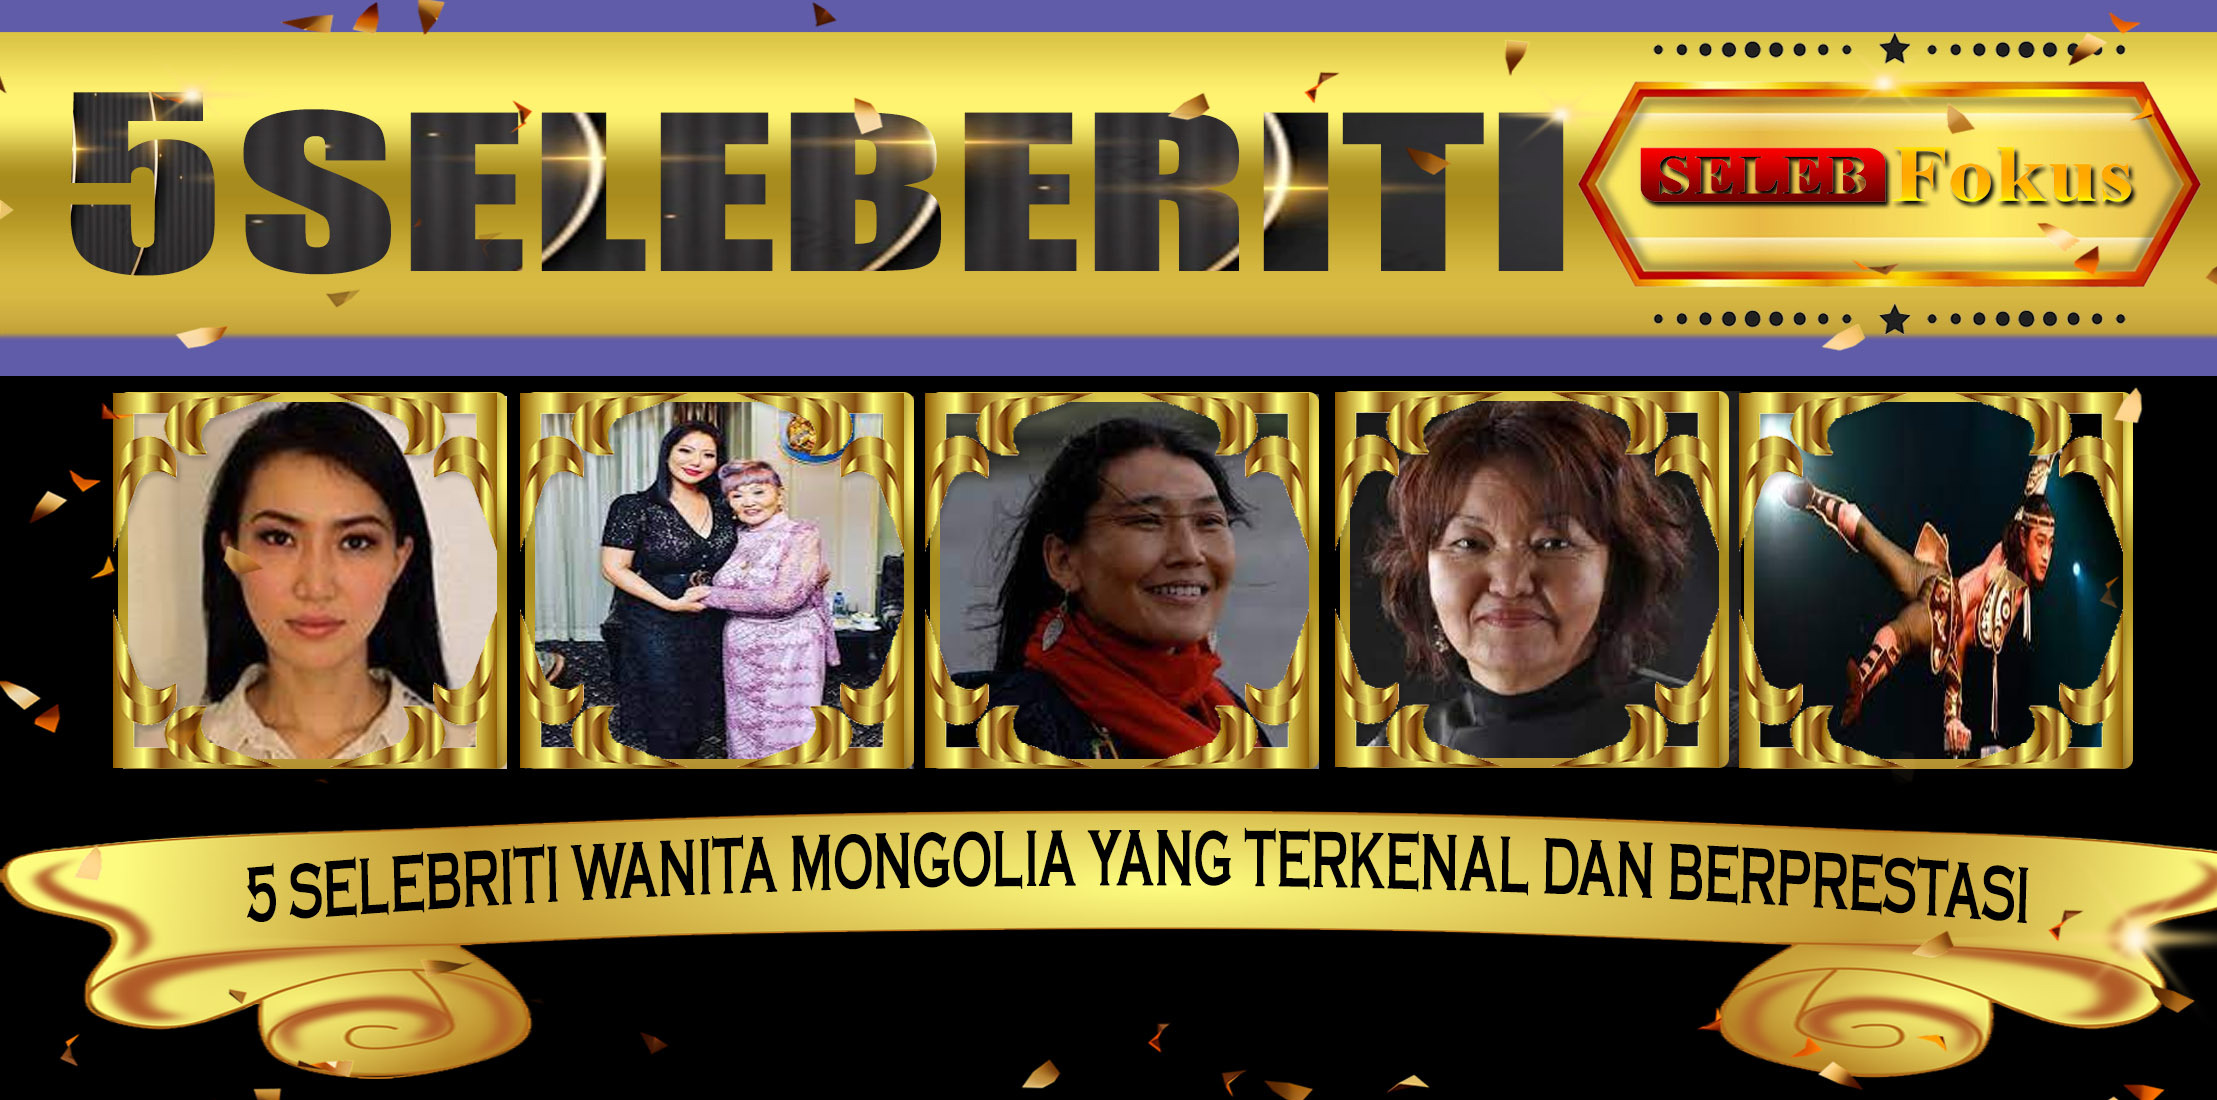 5 Selebriti Wanita Mongolia yang Terkenal dan Berprestasi